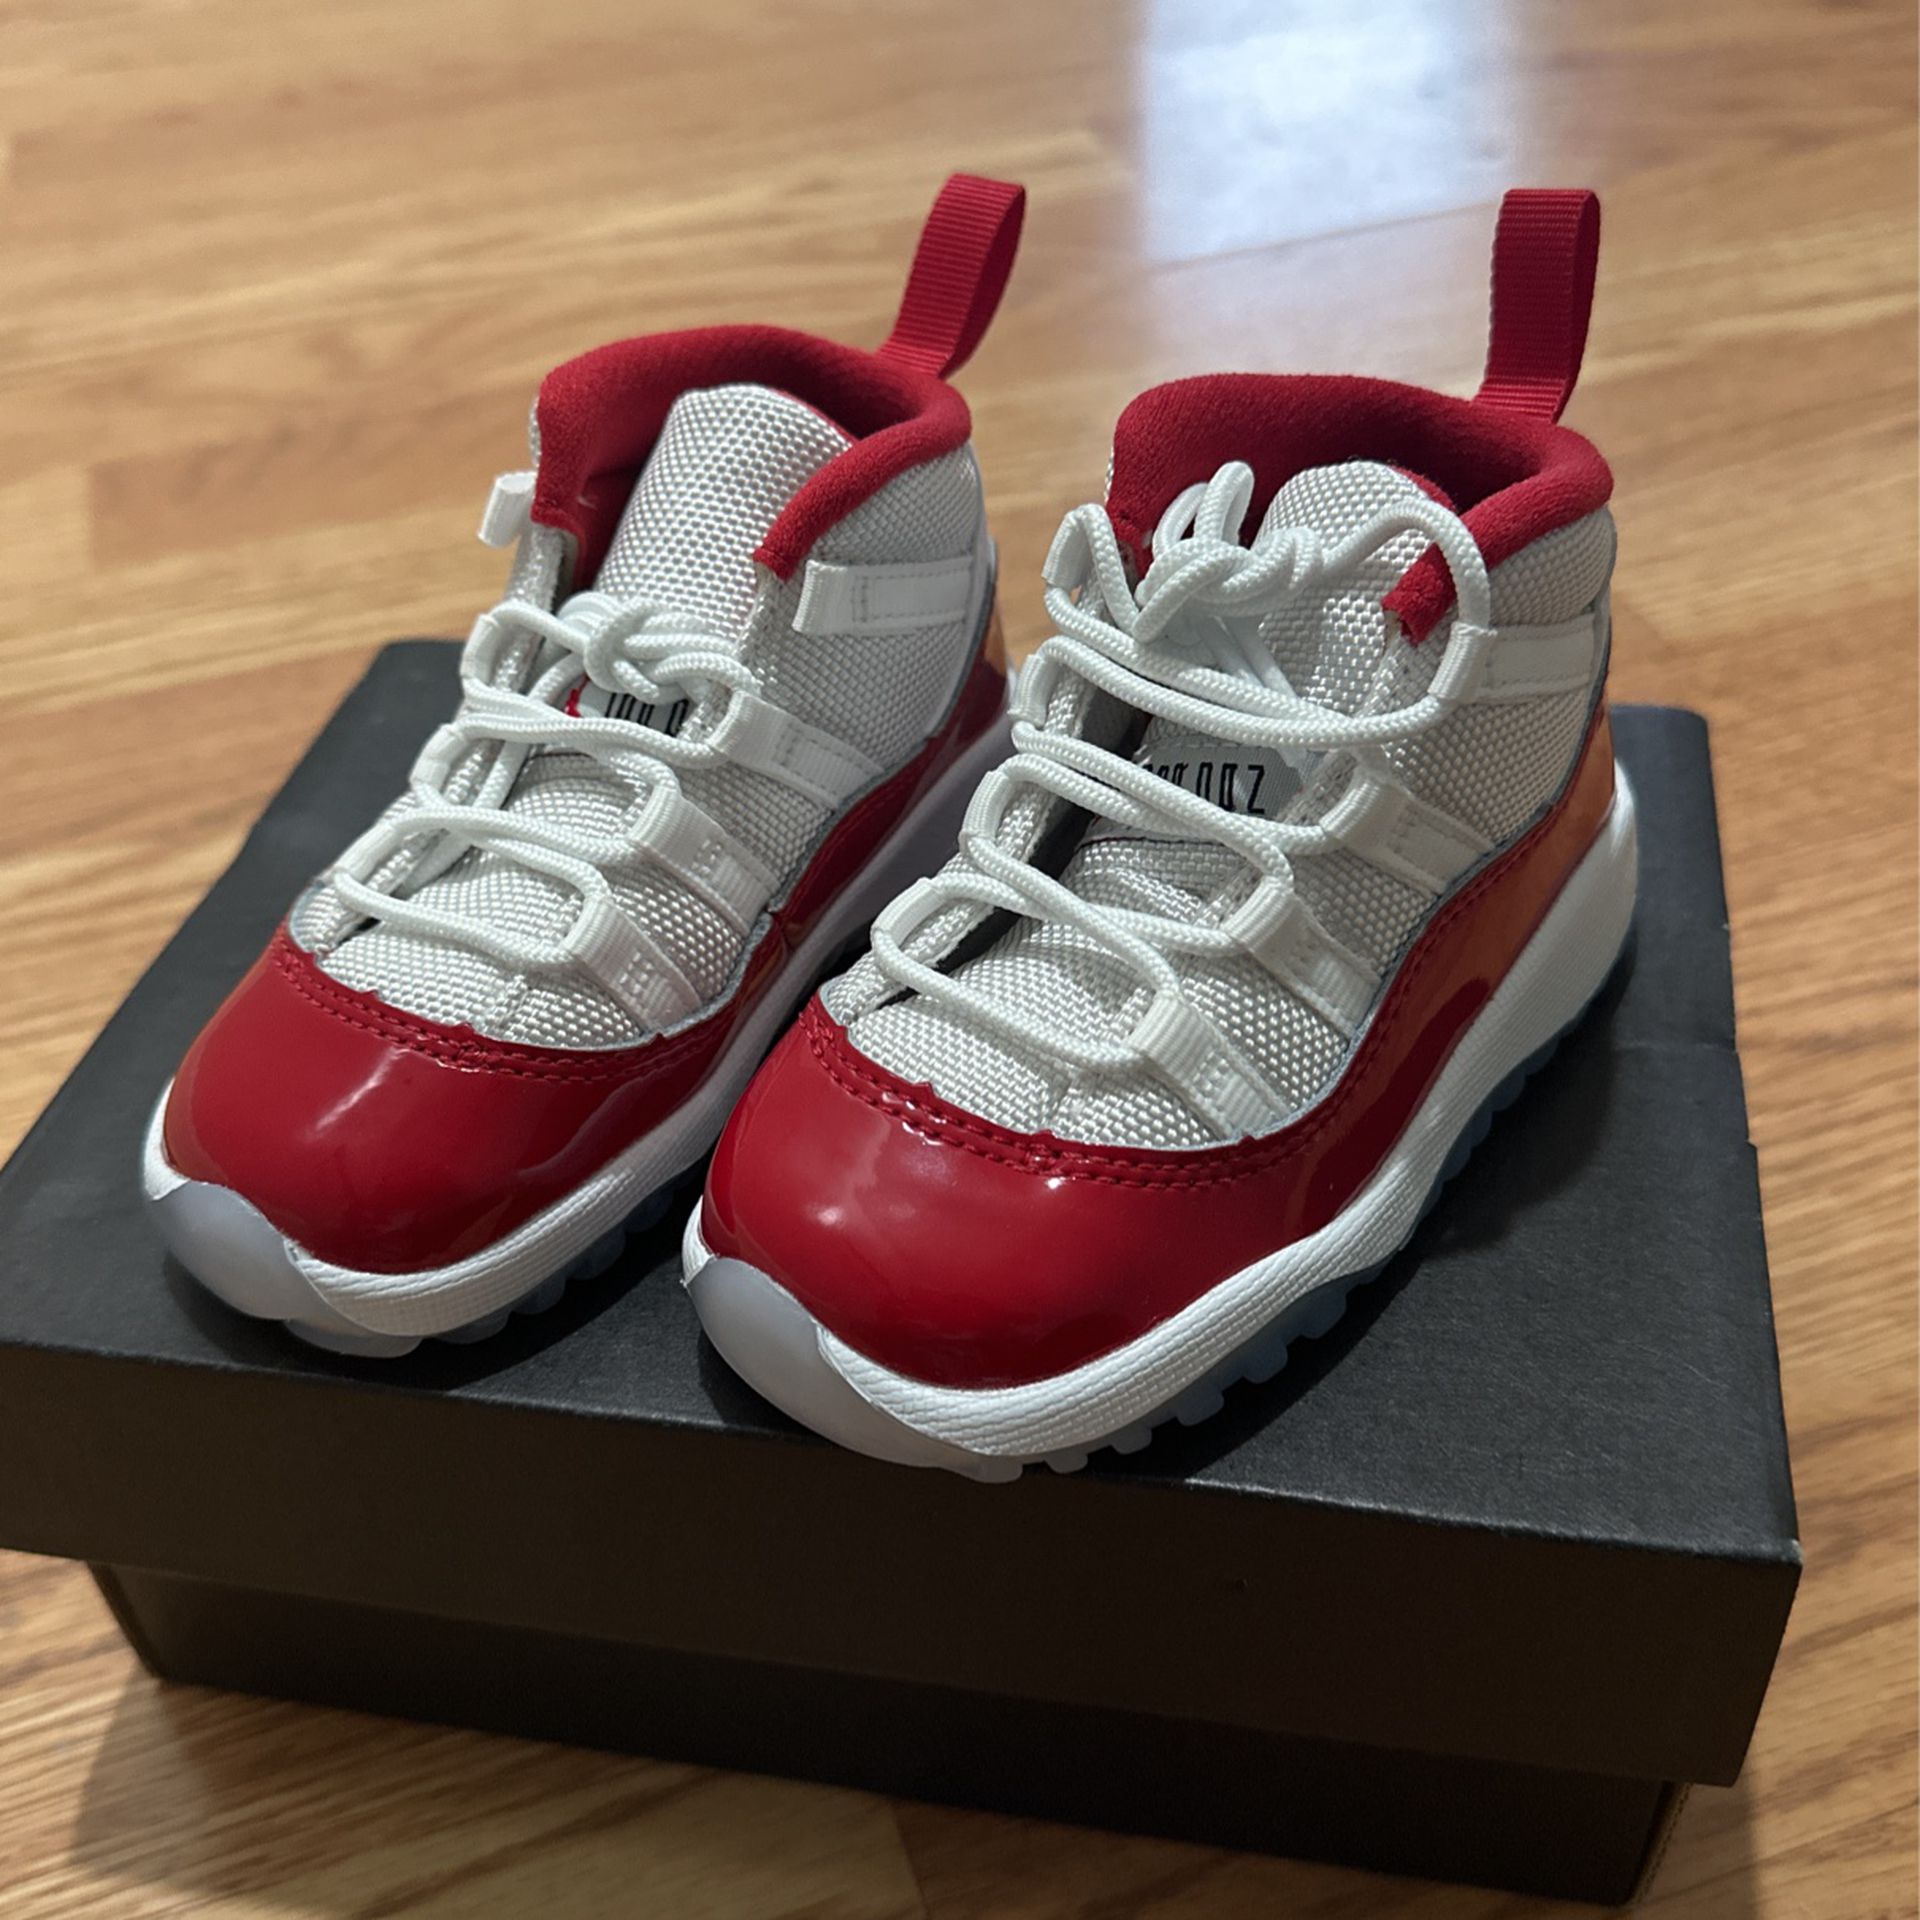 New Jordan 11 Cherry red - 6c